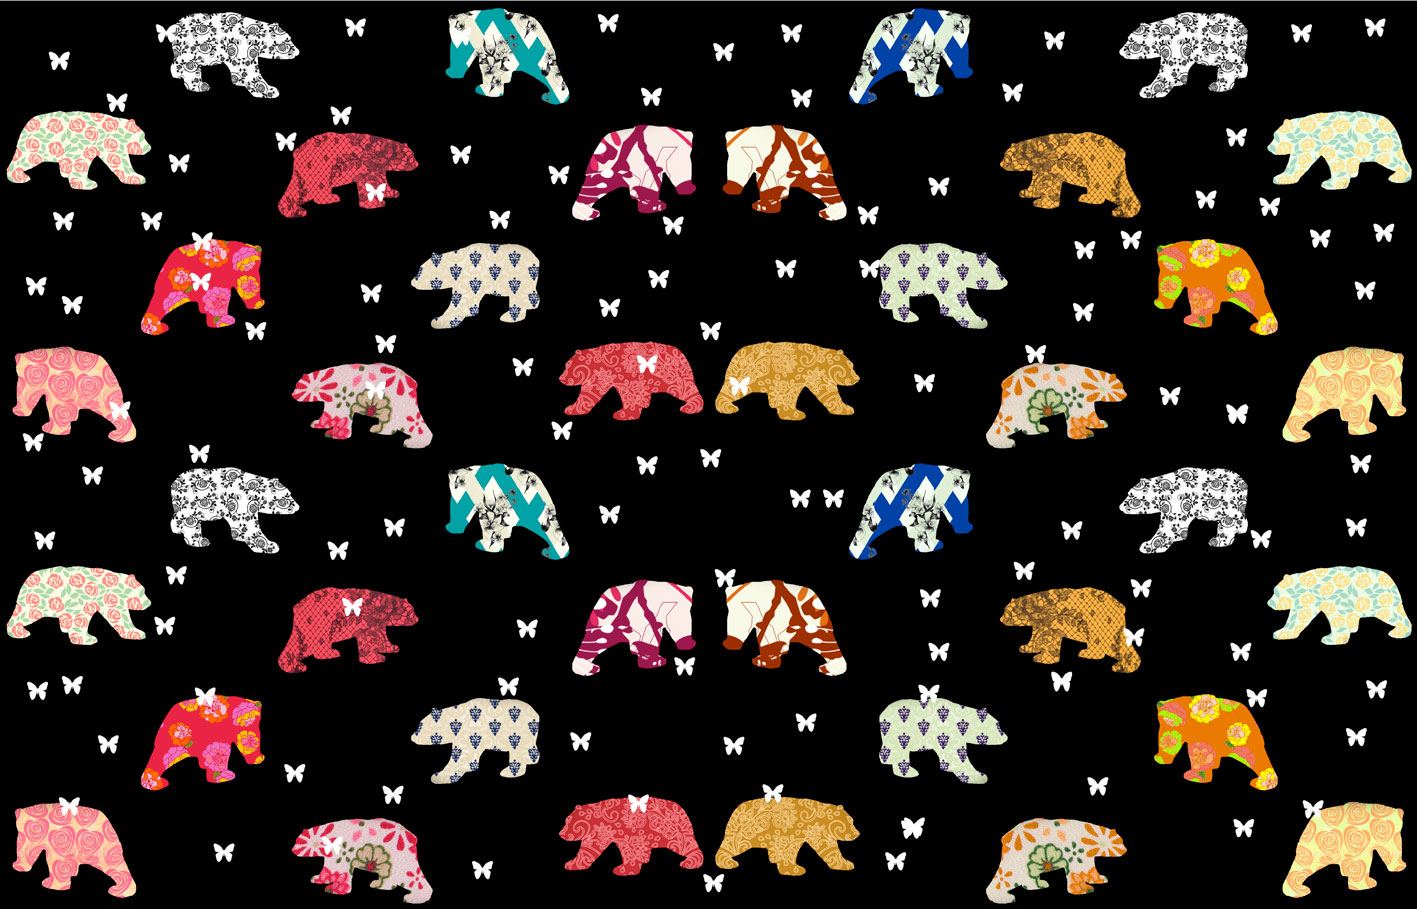 Patterns Bears on Black  Thierry Bisch artiste peintre contemporain animaux tableau art décoration biodiversité conservation 